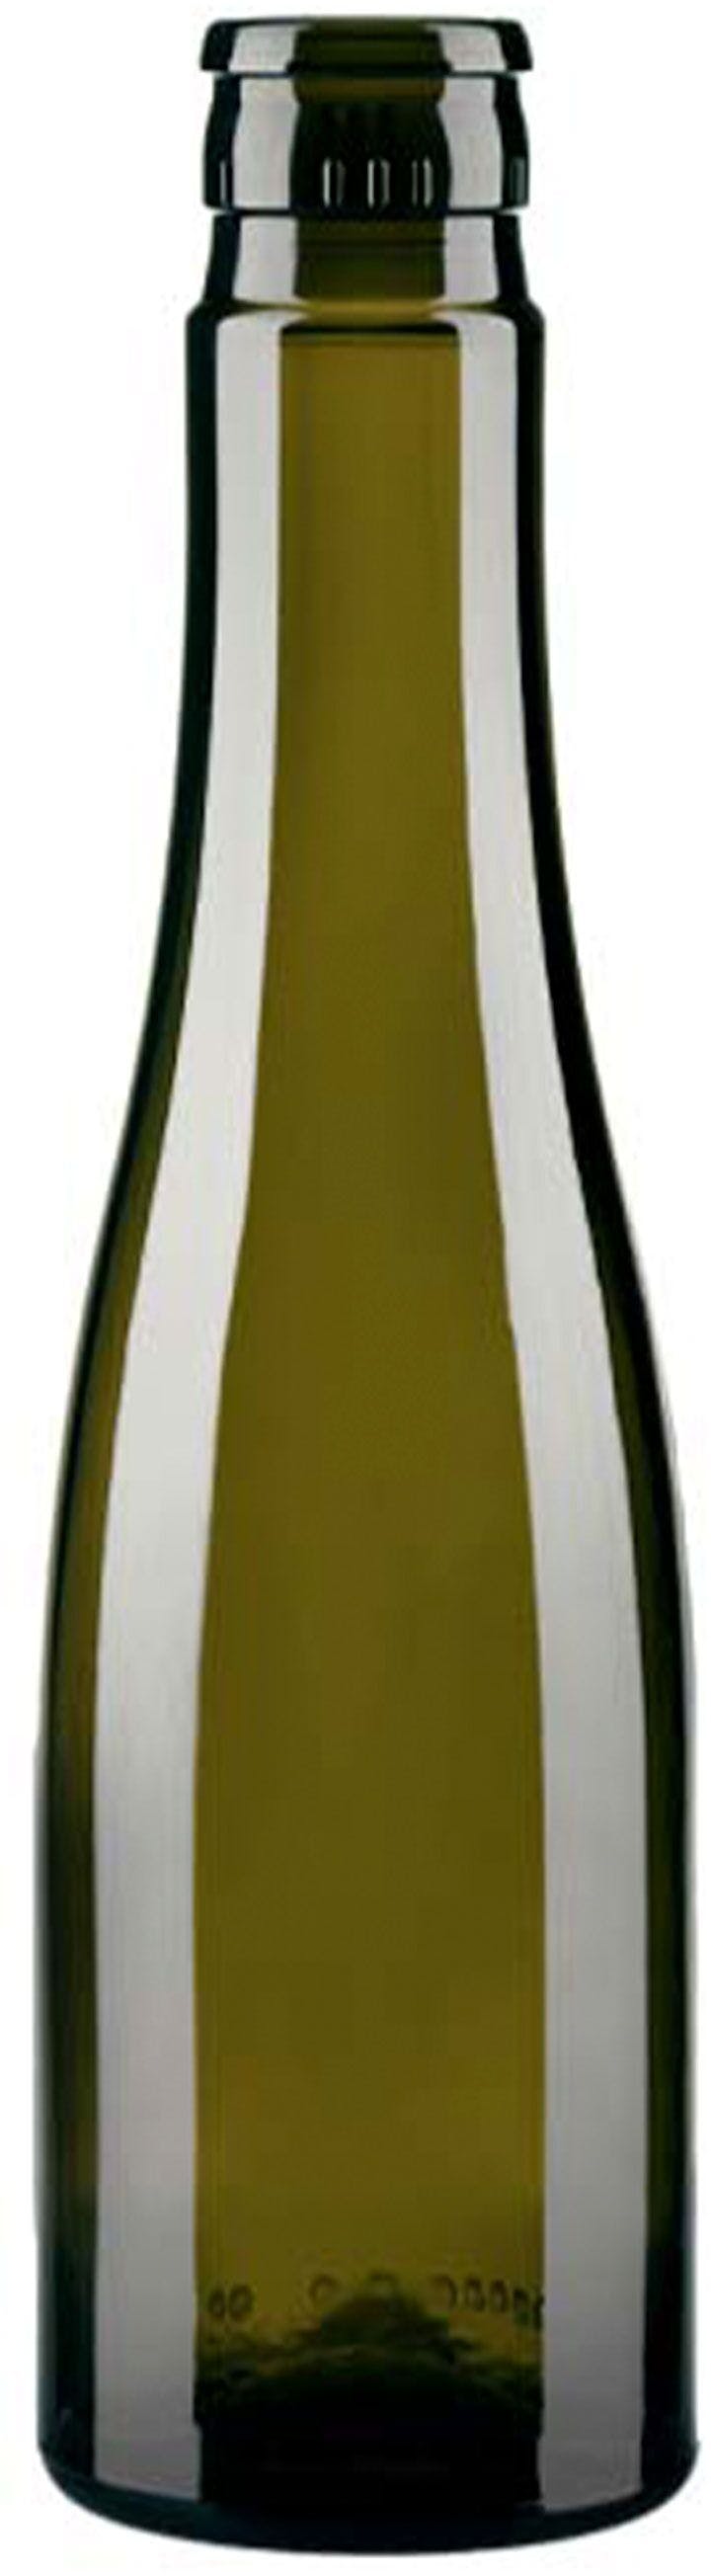 Bottle OLIO  REALE TOP 250 ml BG-Press